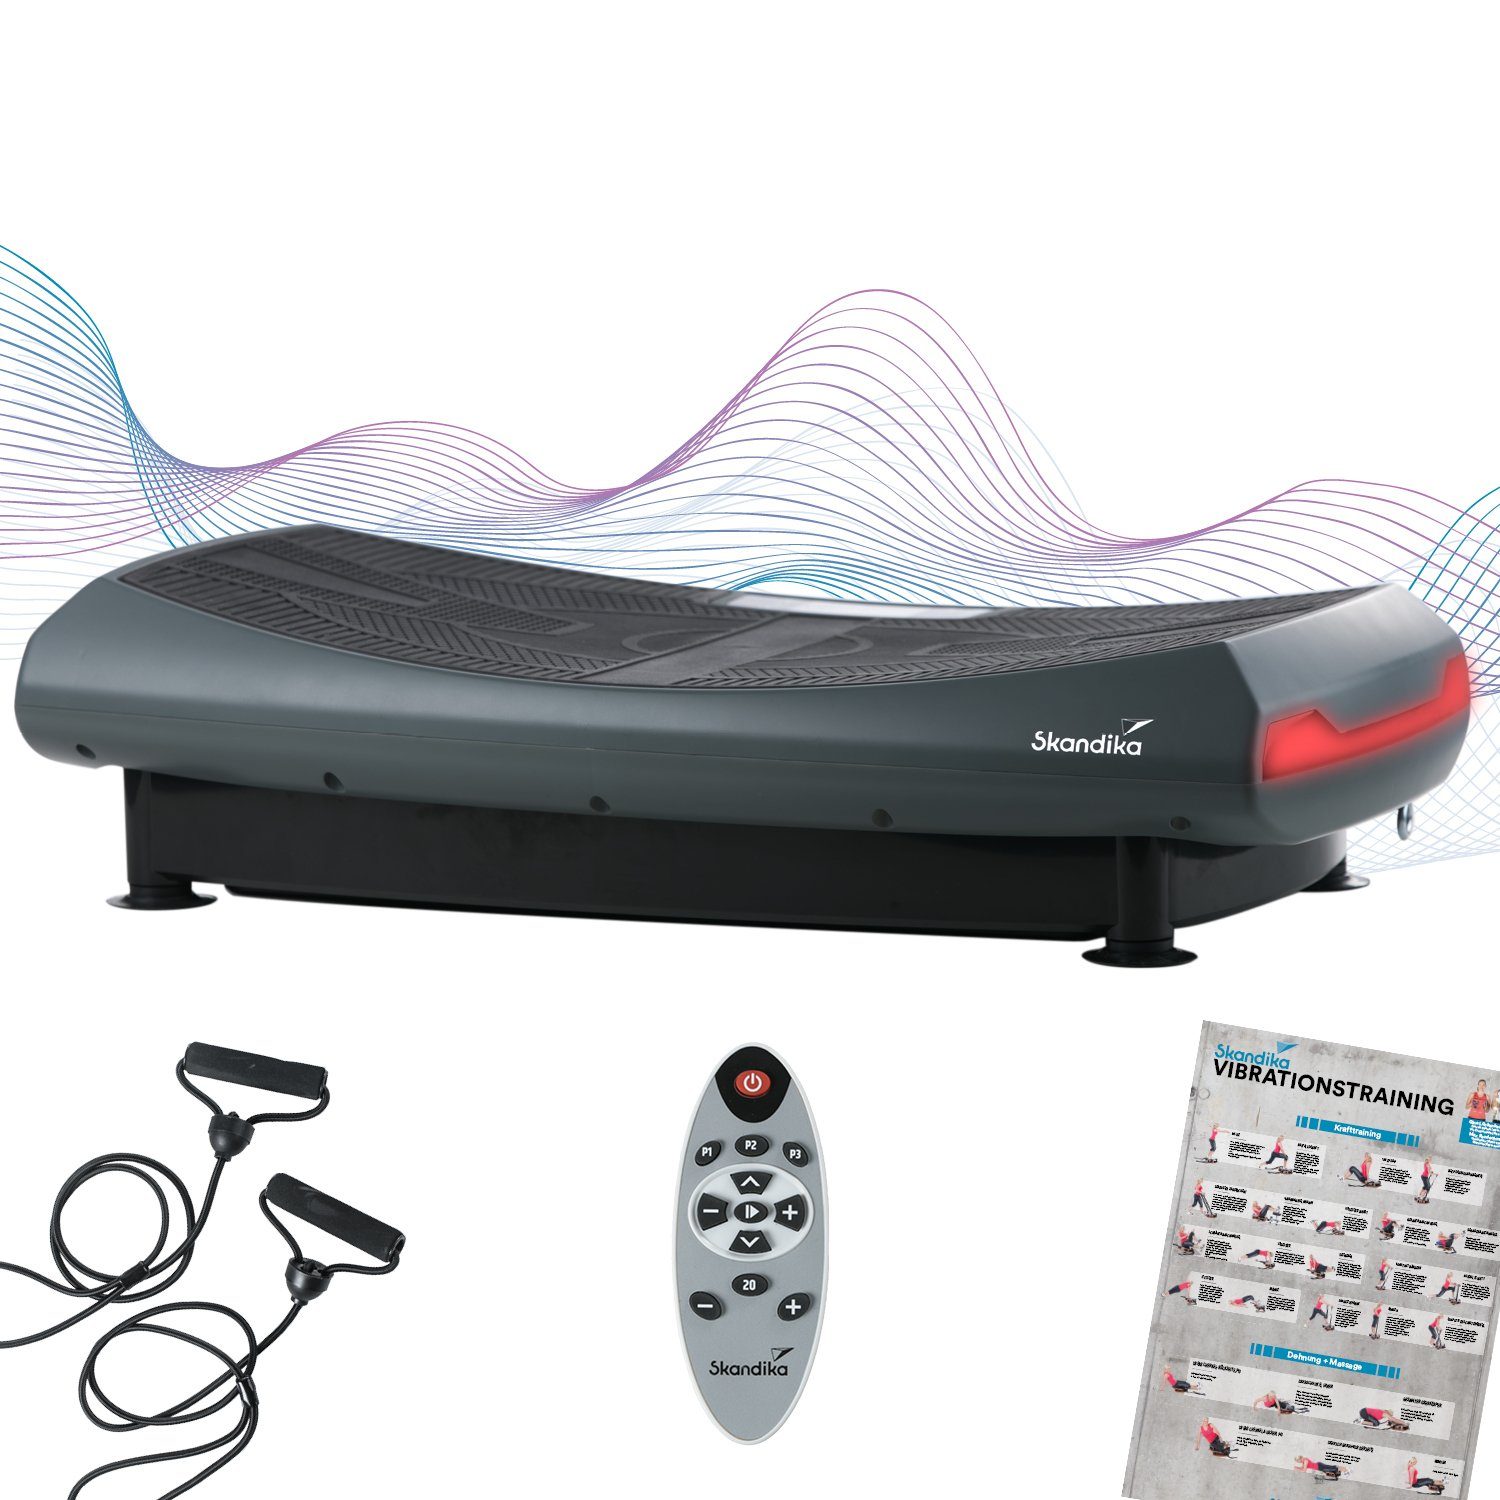 Skandika Vibrationsplatte 3D Vibration V2000 Trainingsbänder, Curved Design, Fernbedienung, Bluetooth Poster, (grau) Starke Motoren, 2